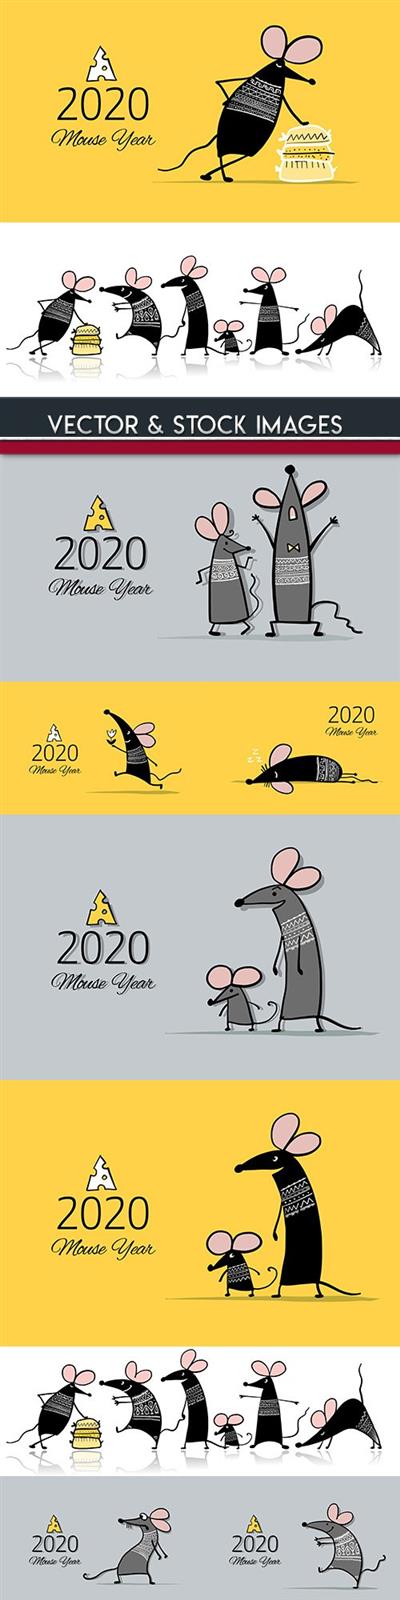 White rat symbol of New Year 2020 funny cartoon